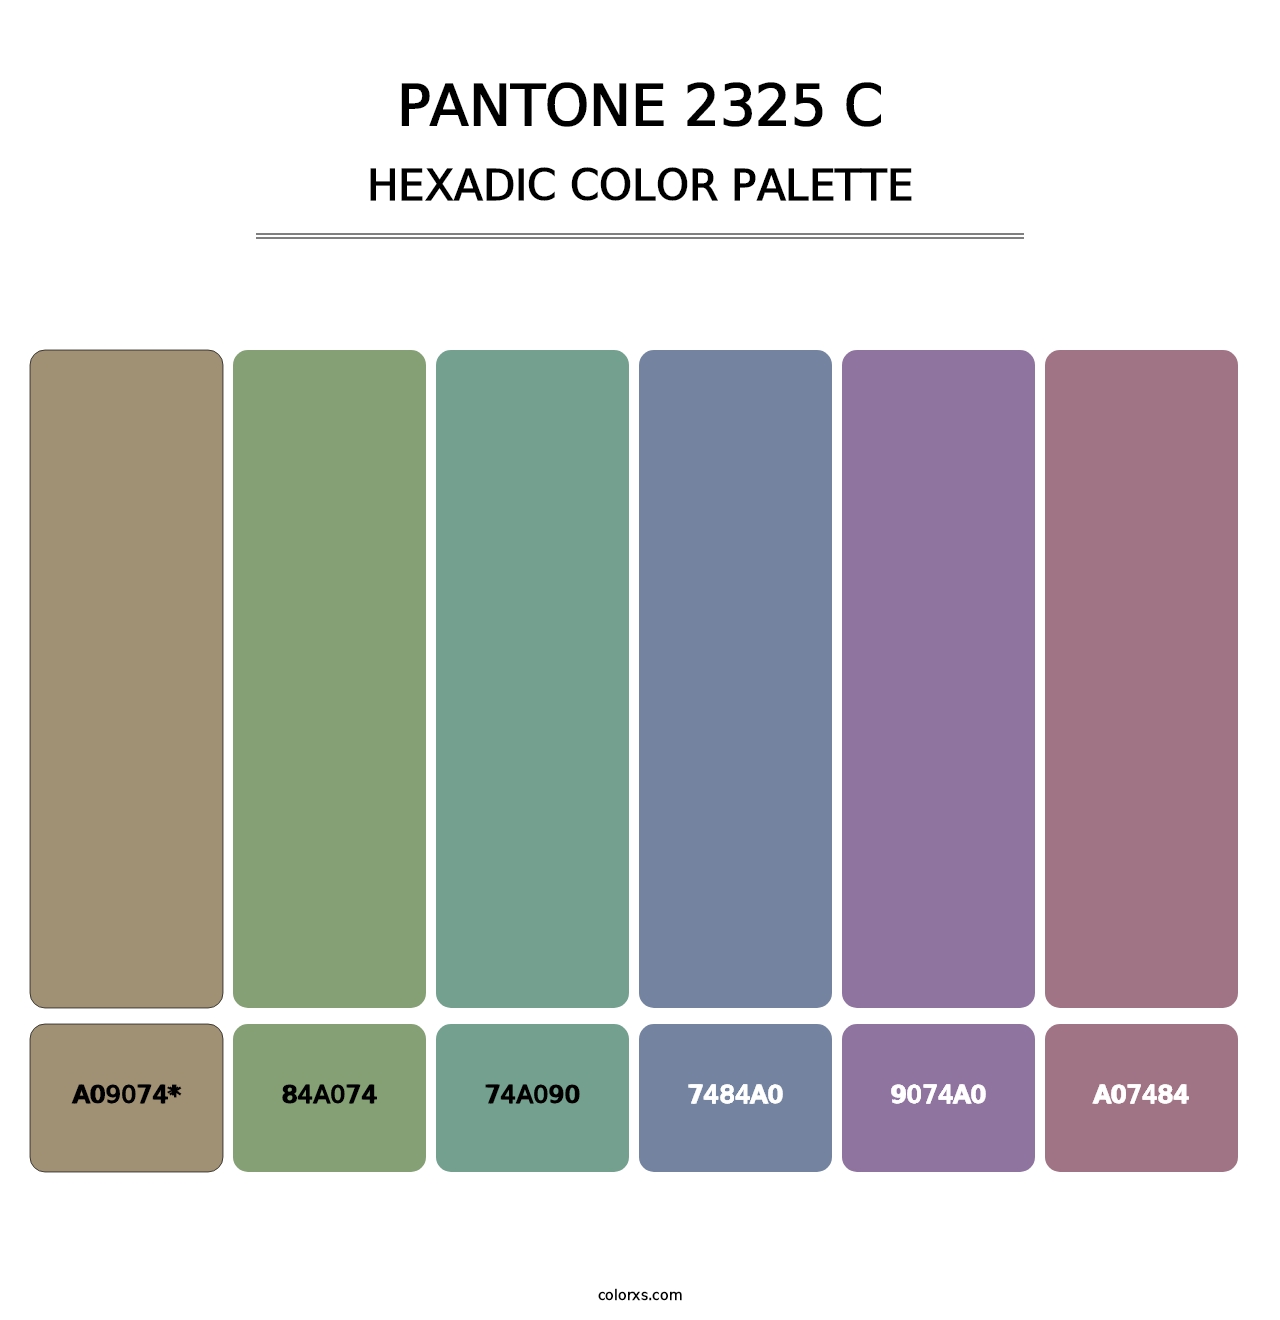 PANTONE 2325 C - Hexadic Color Palette